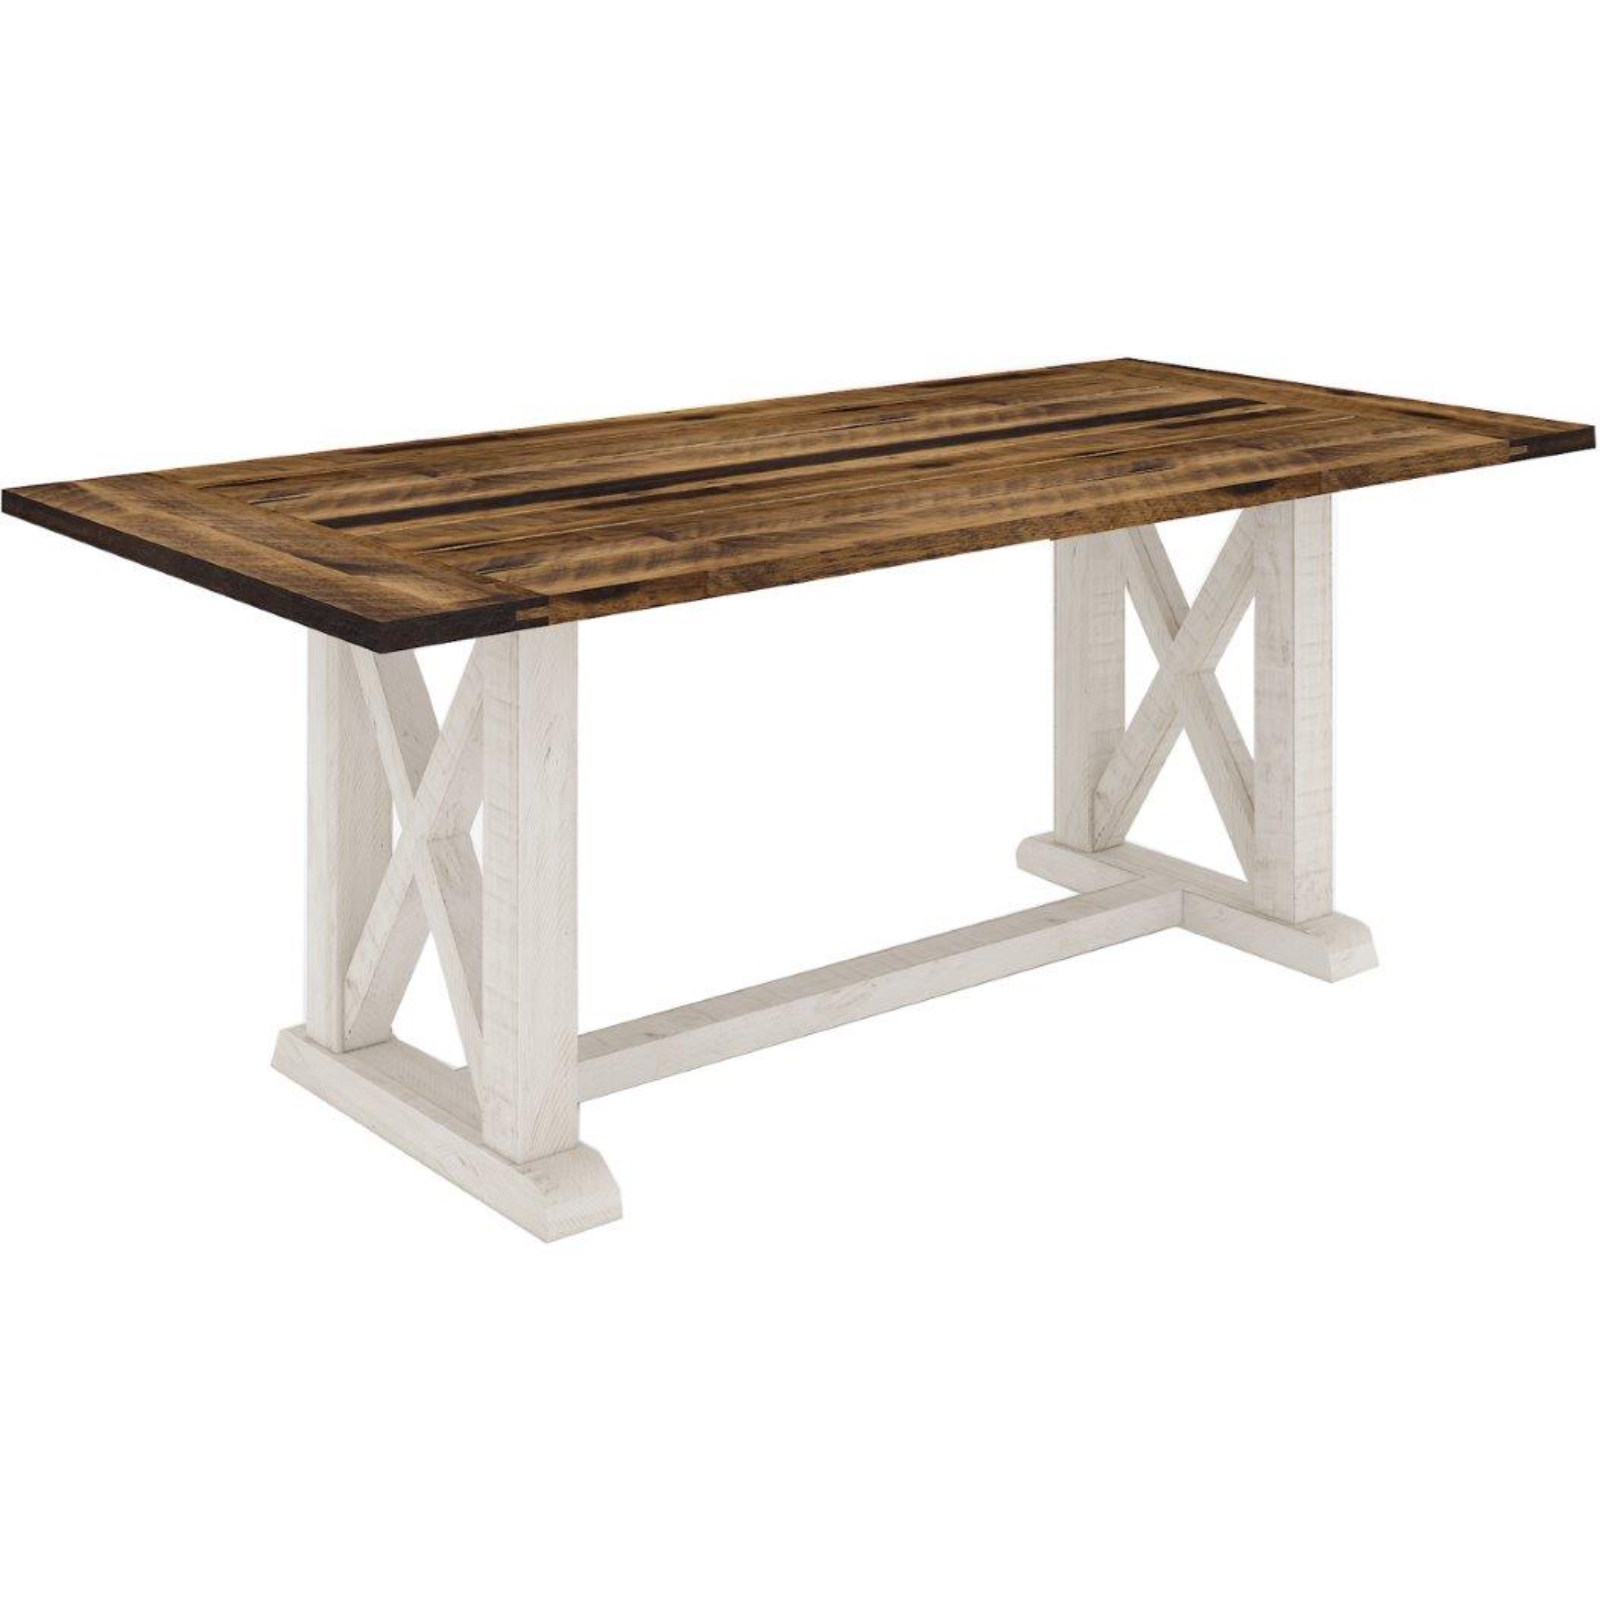 Erica Dining Table Solid Acacia Timber Wood Hampton Furniture Brown White – 240x100x77 cm